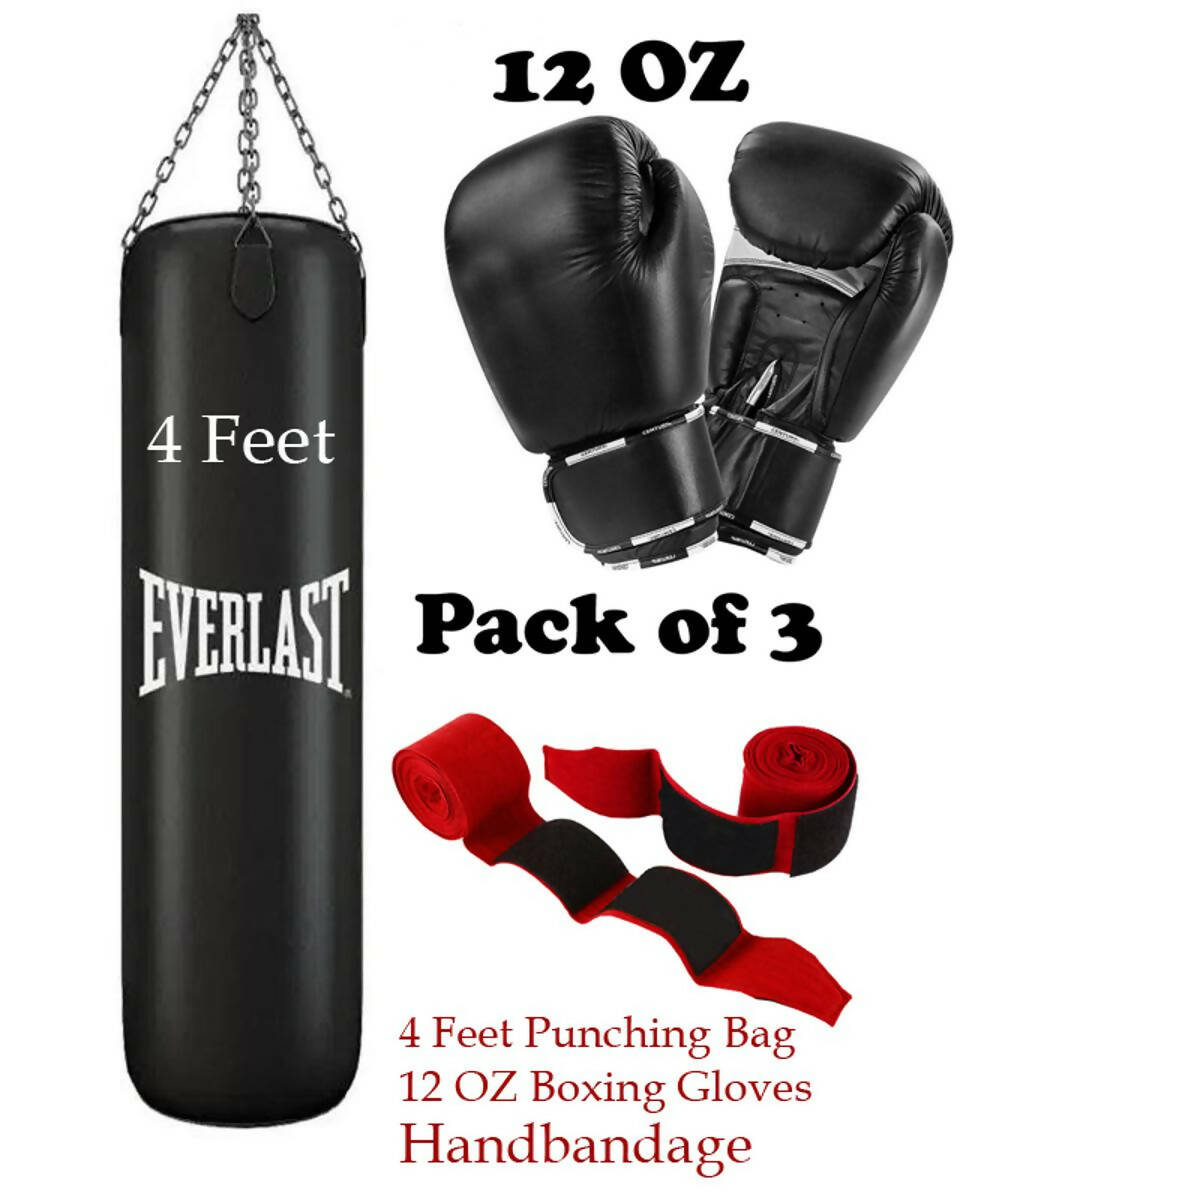 Pack of 3 Boxing Bag 3fth + Boxing Gloves punching bag bandages hand wraps